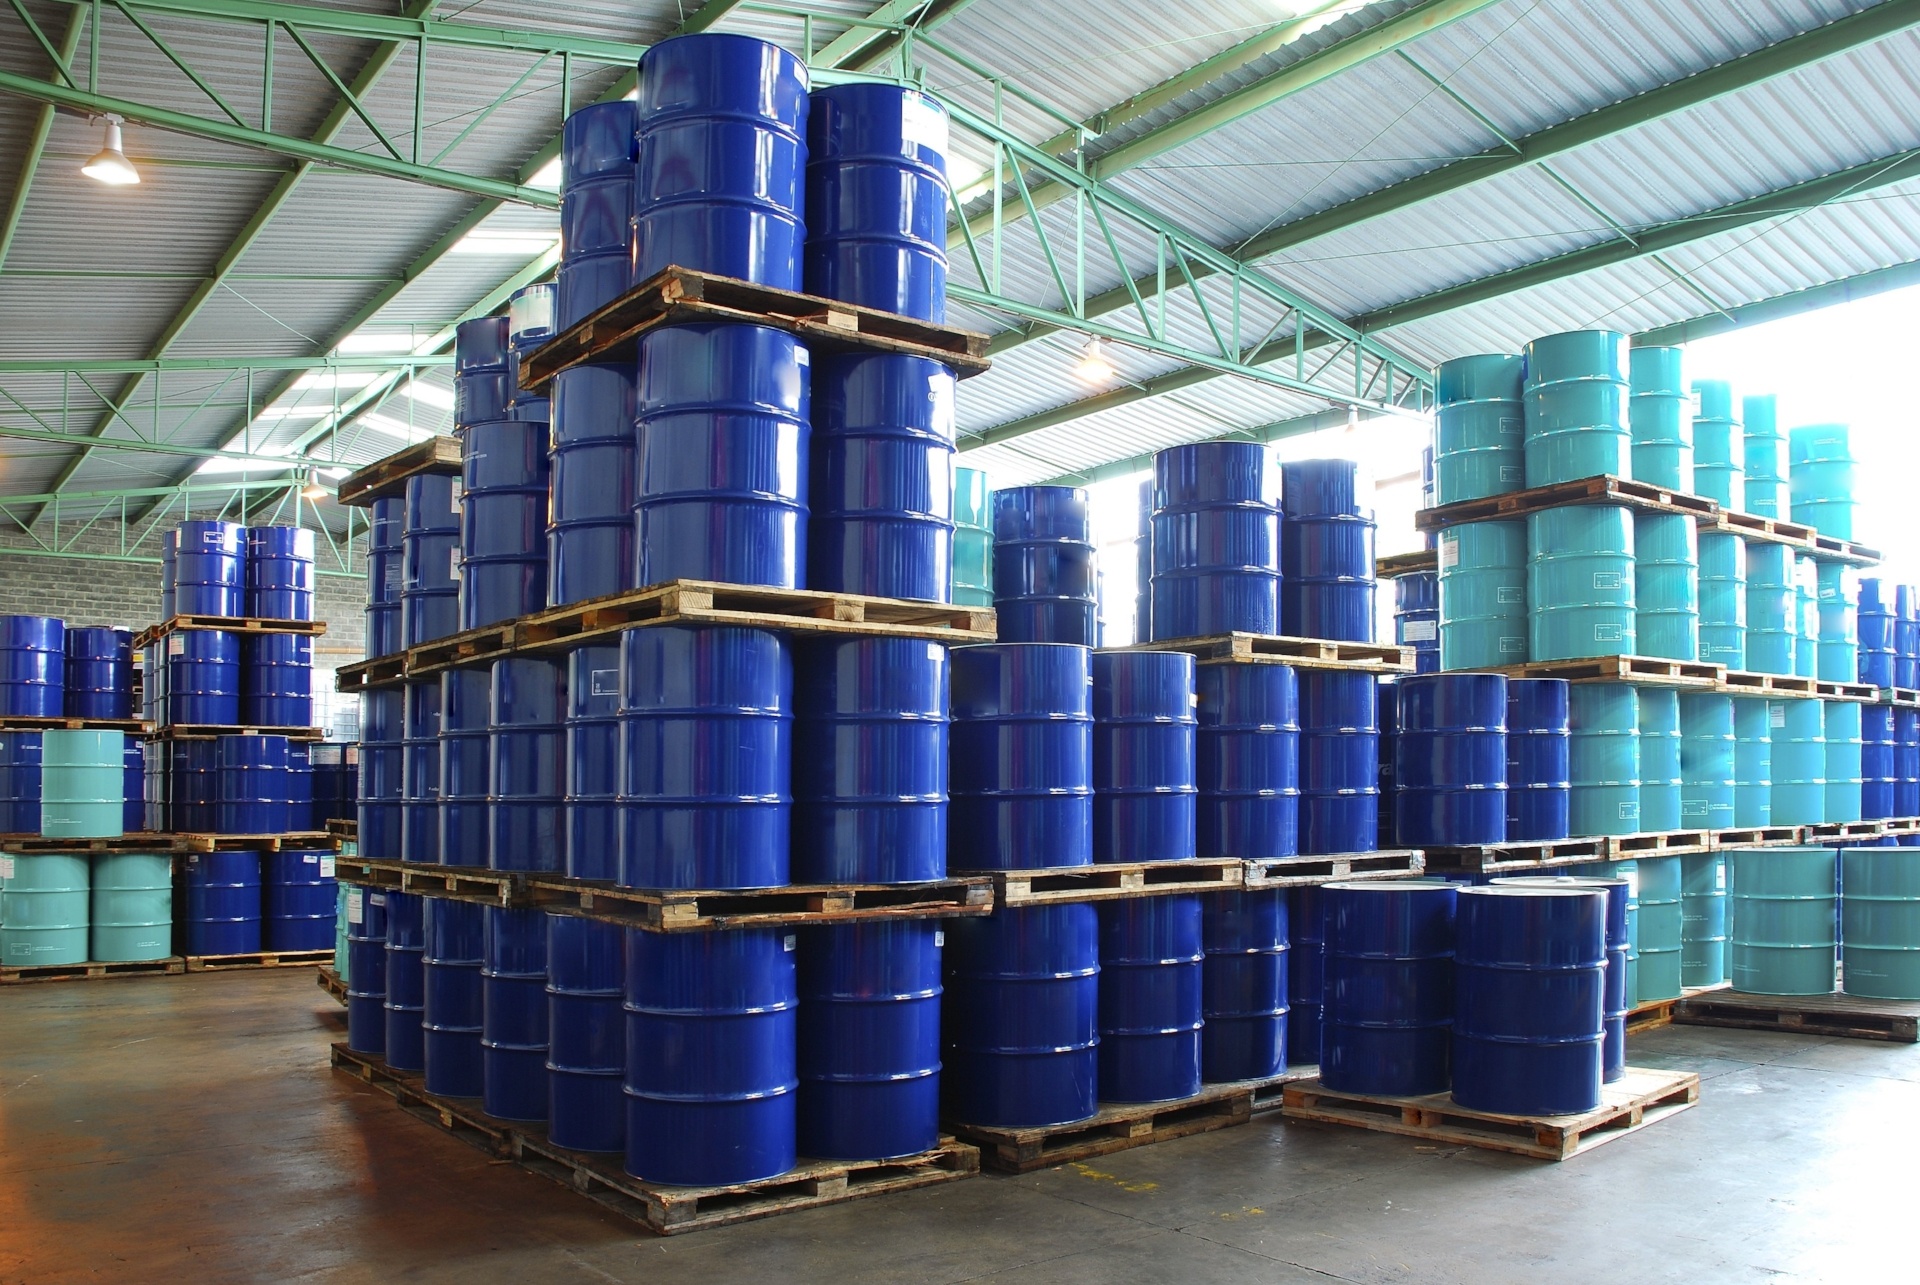 storage of flammable liquids in warehouses